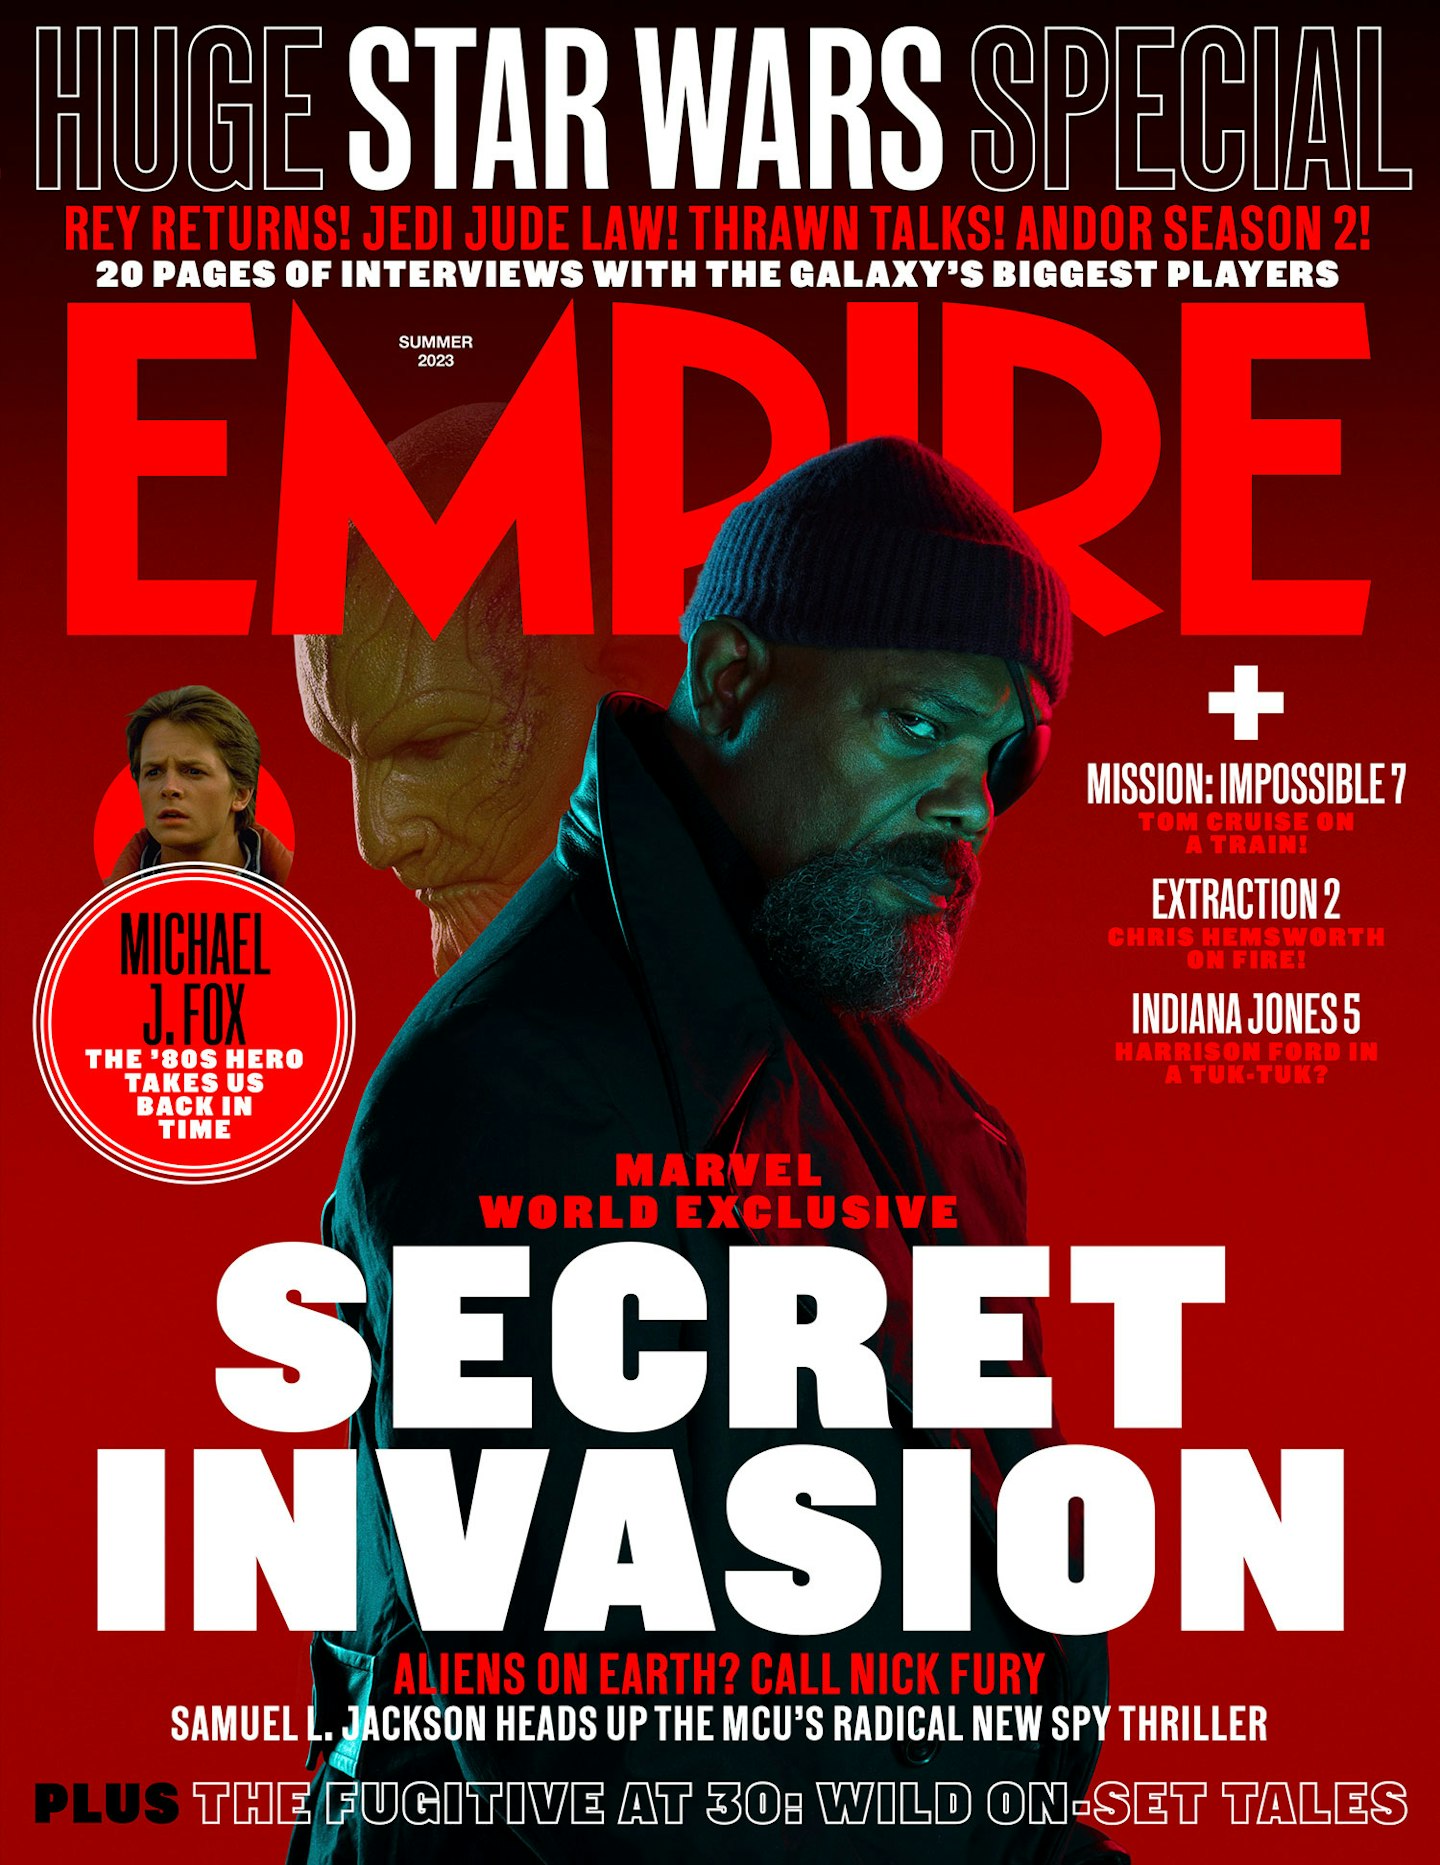 Secret Invasion: Will the Nick Fury-led series return for season 2